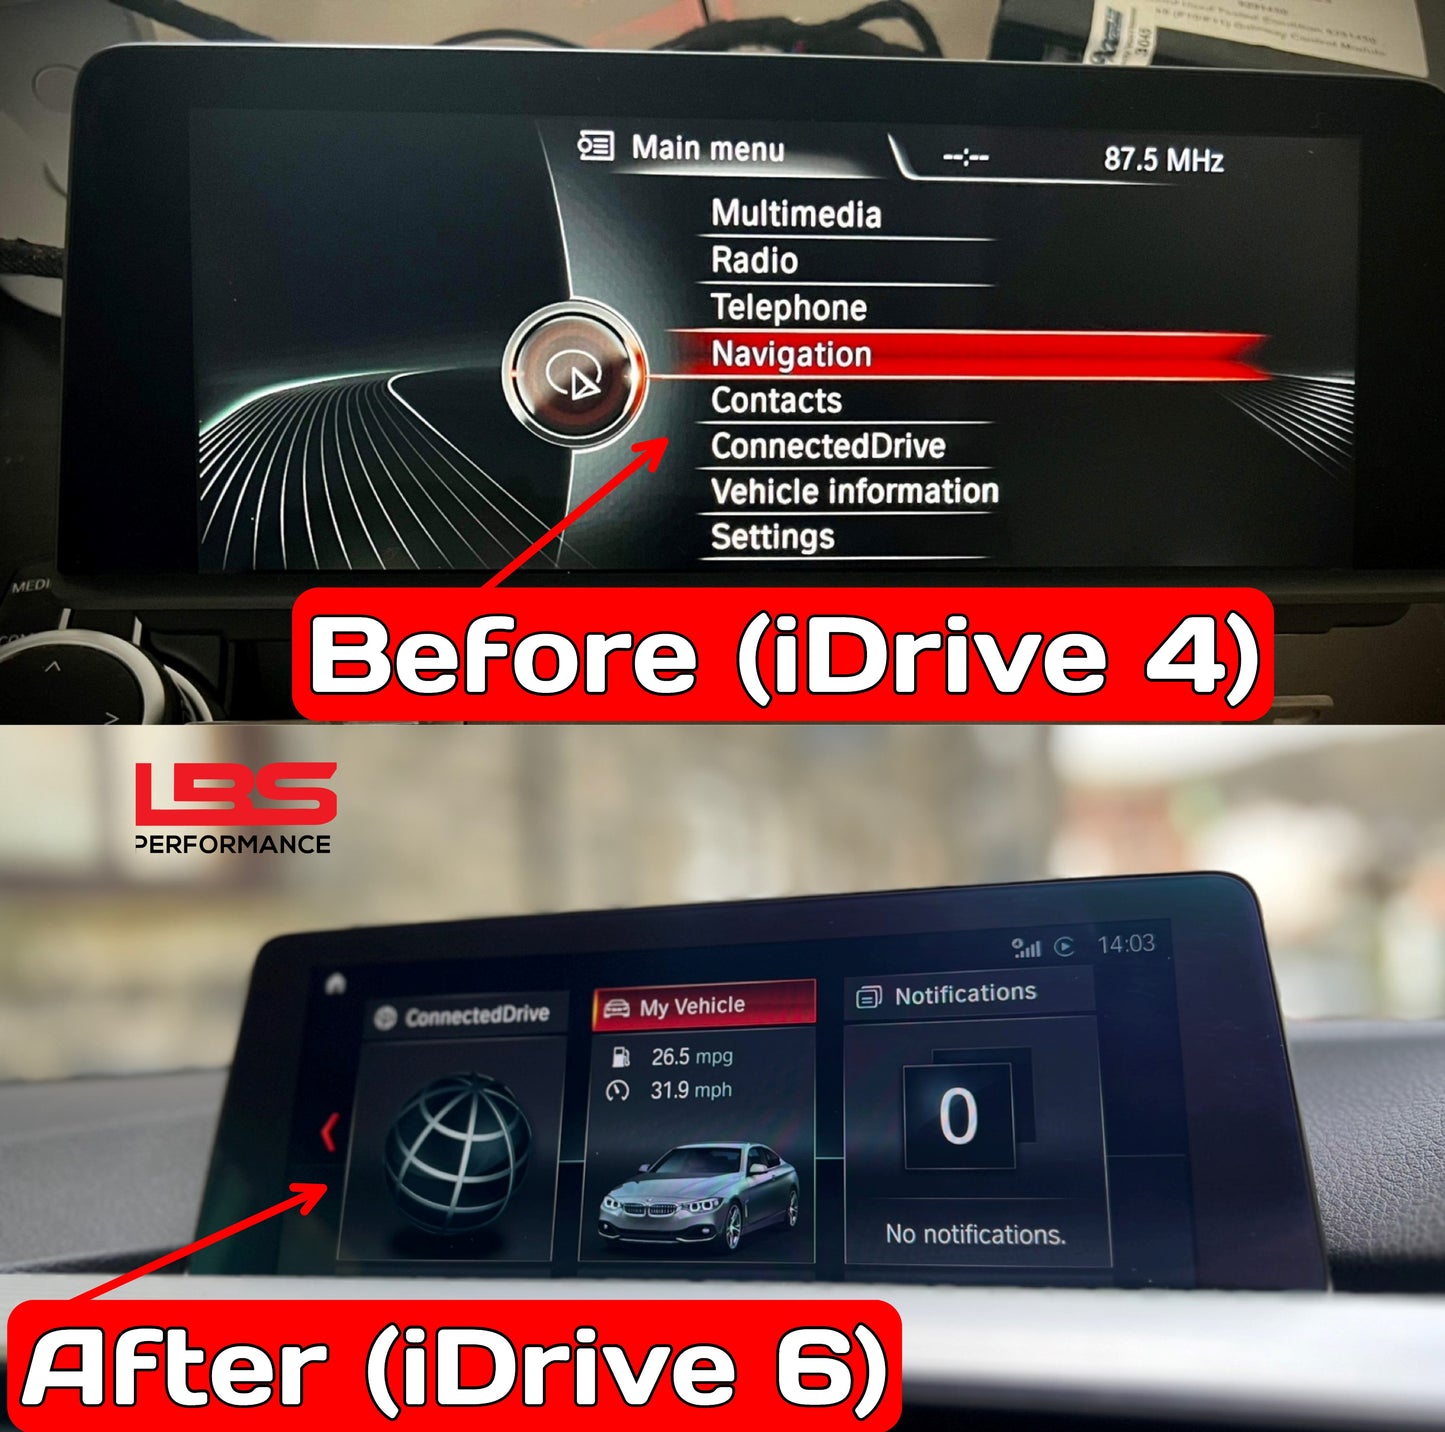 iDrive 4-iDrive 6 Flash + Fullscreen Apple CarPlay